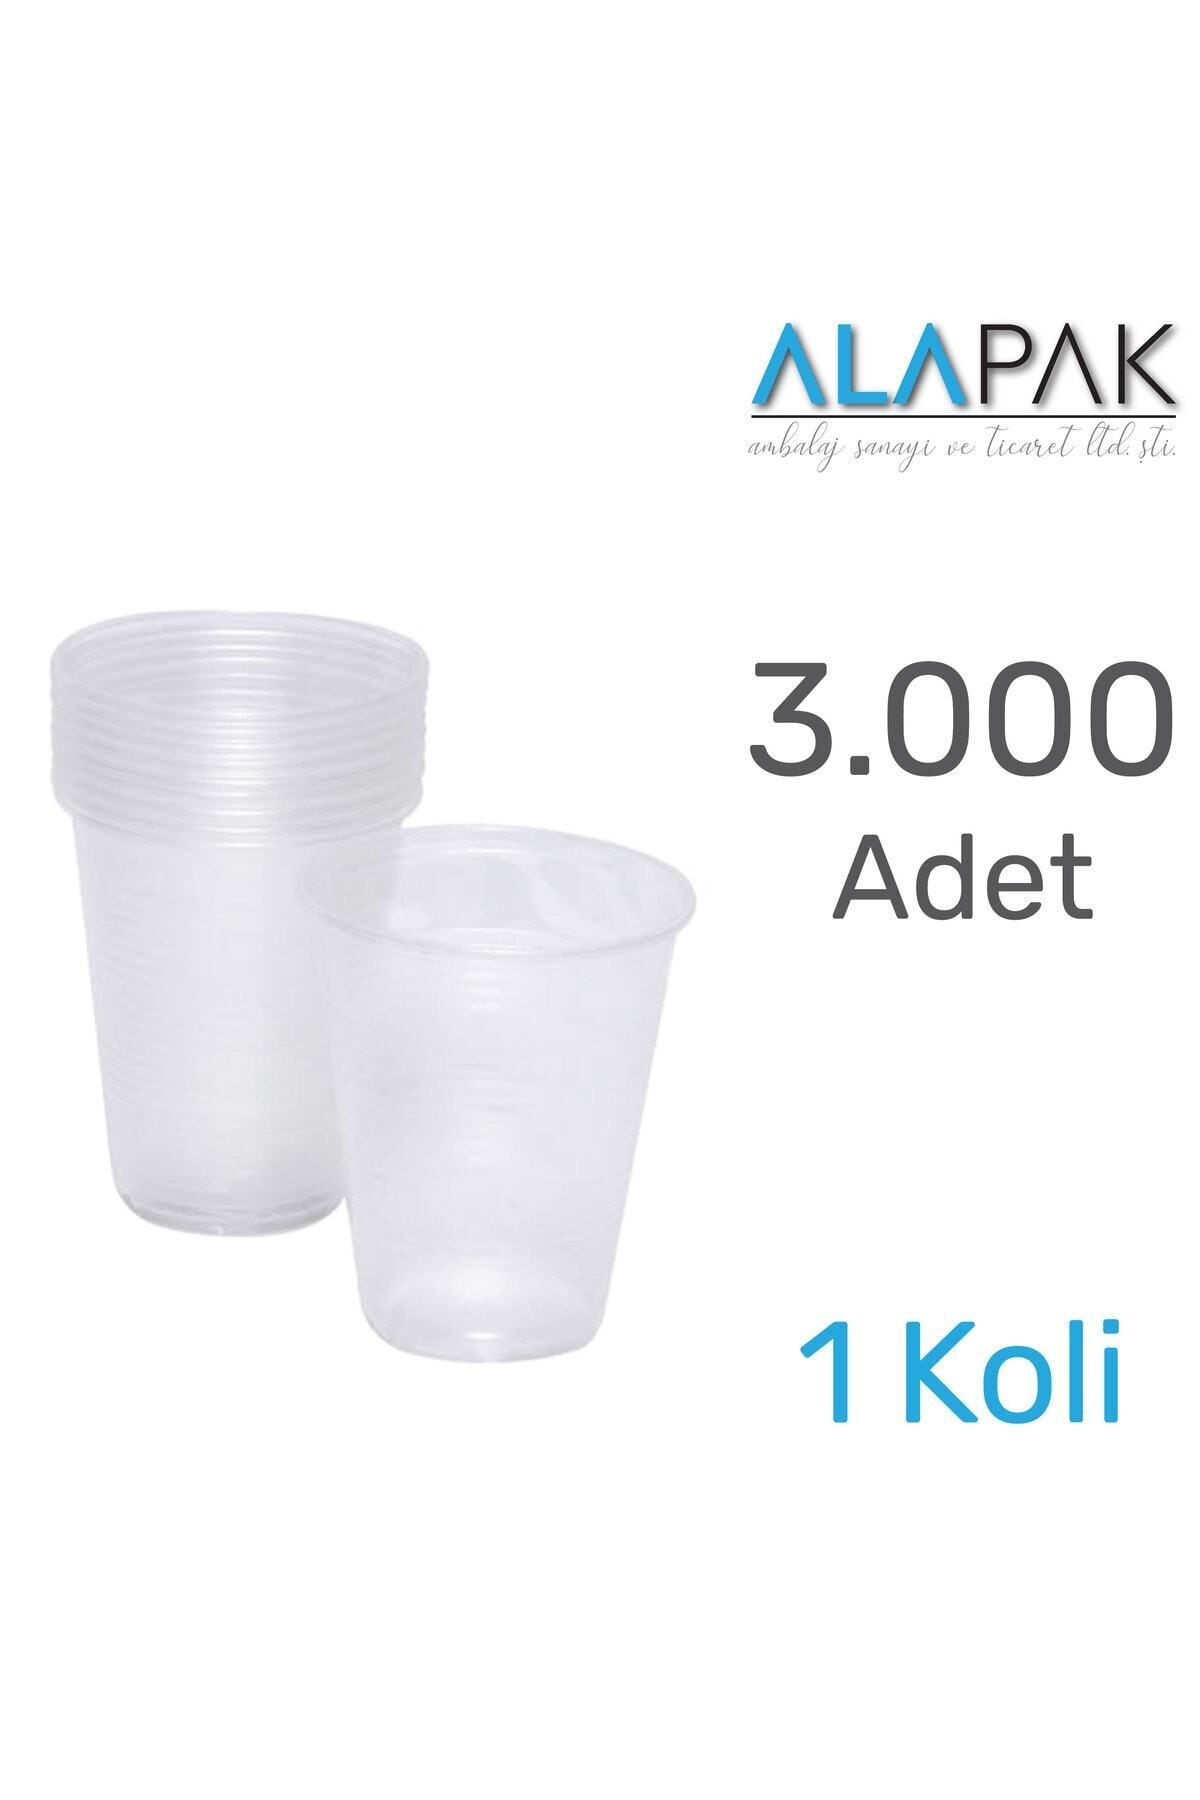 Alapak Plastik Pet Bardak Otomat Bardağı 180cc 3.000 Adet (1 KOLİ)